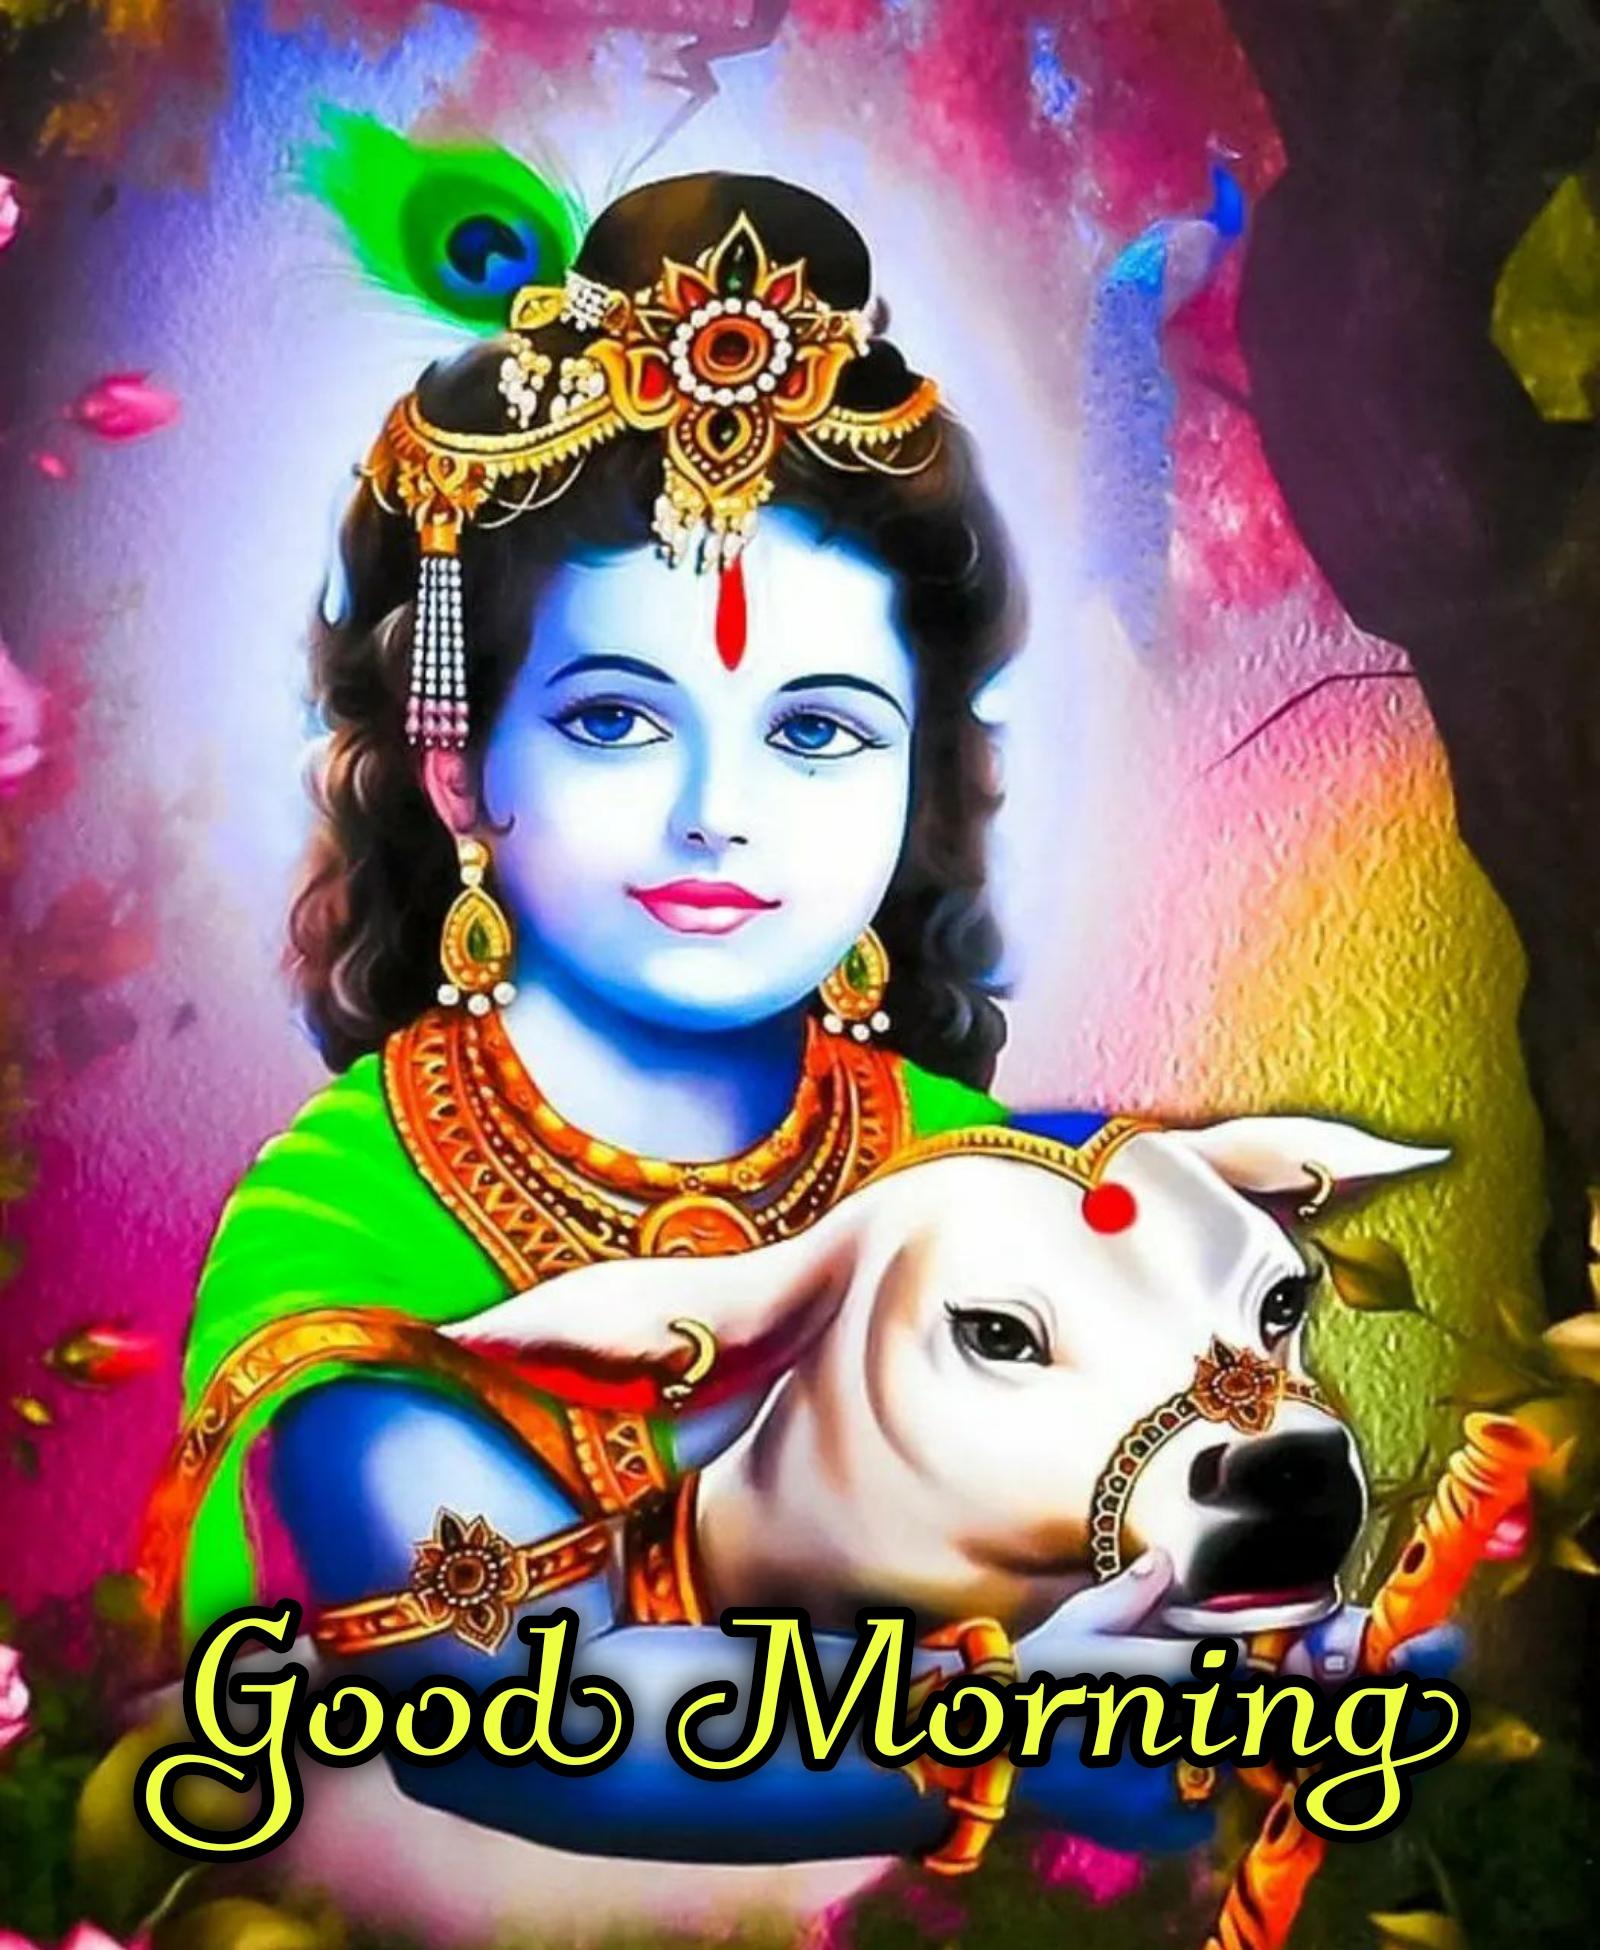 Good Morning Krishna Images for WhatsApp & Facebook